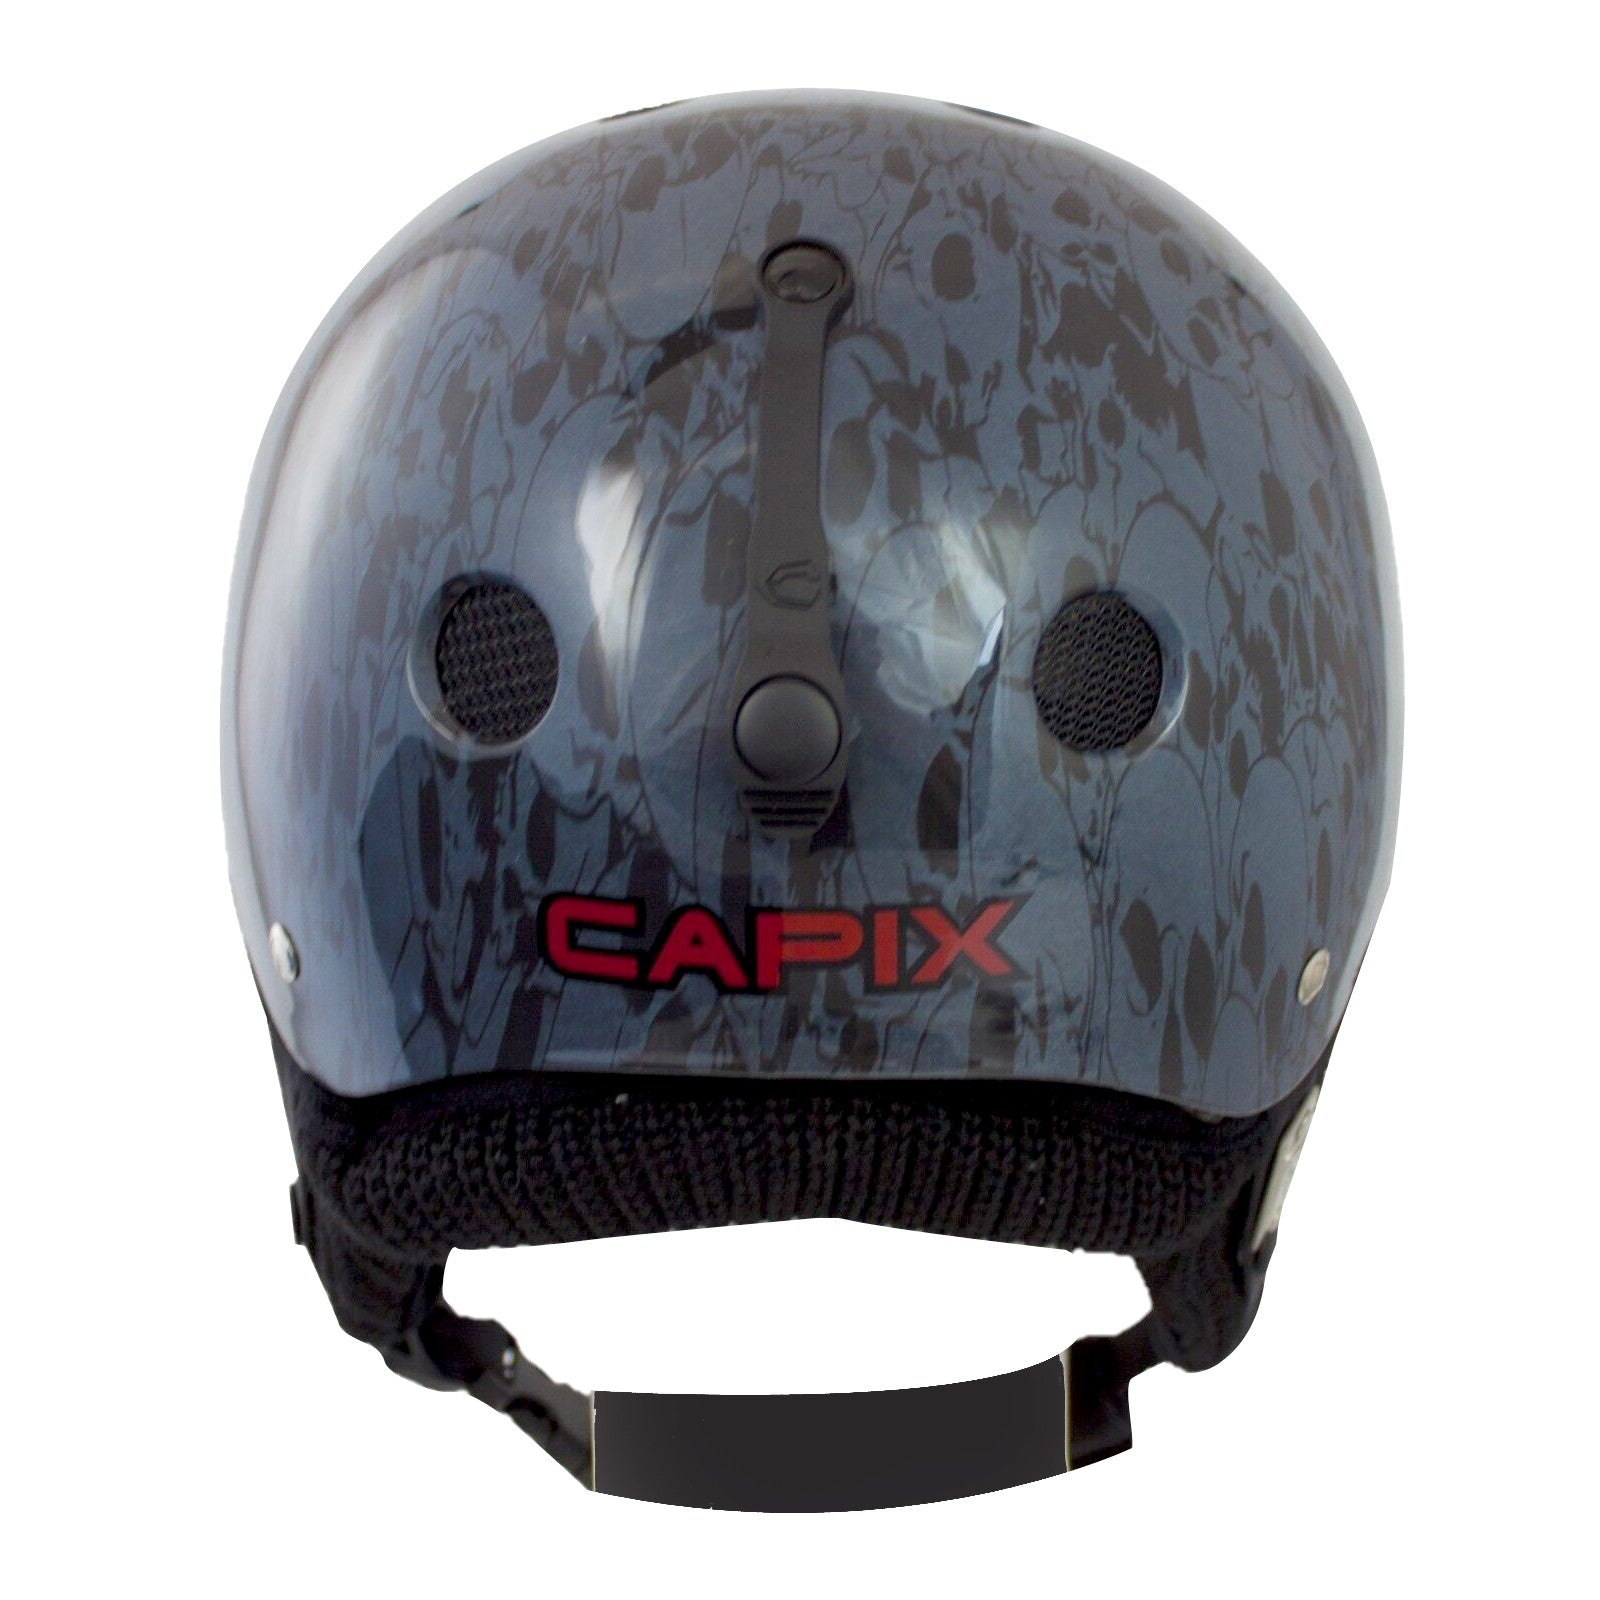 CAPIX- Casco del equipo de nieve